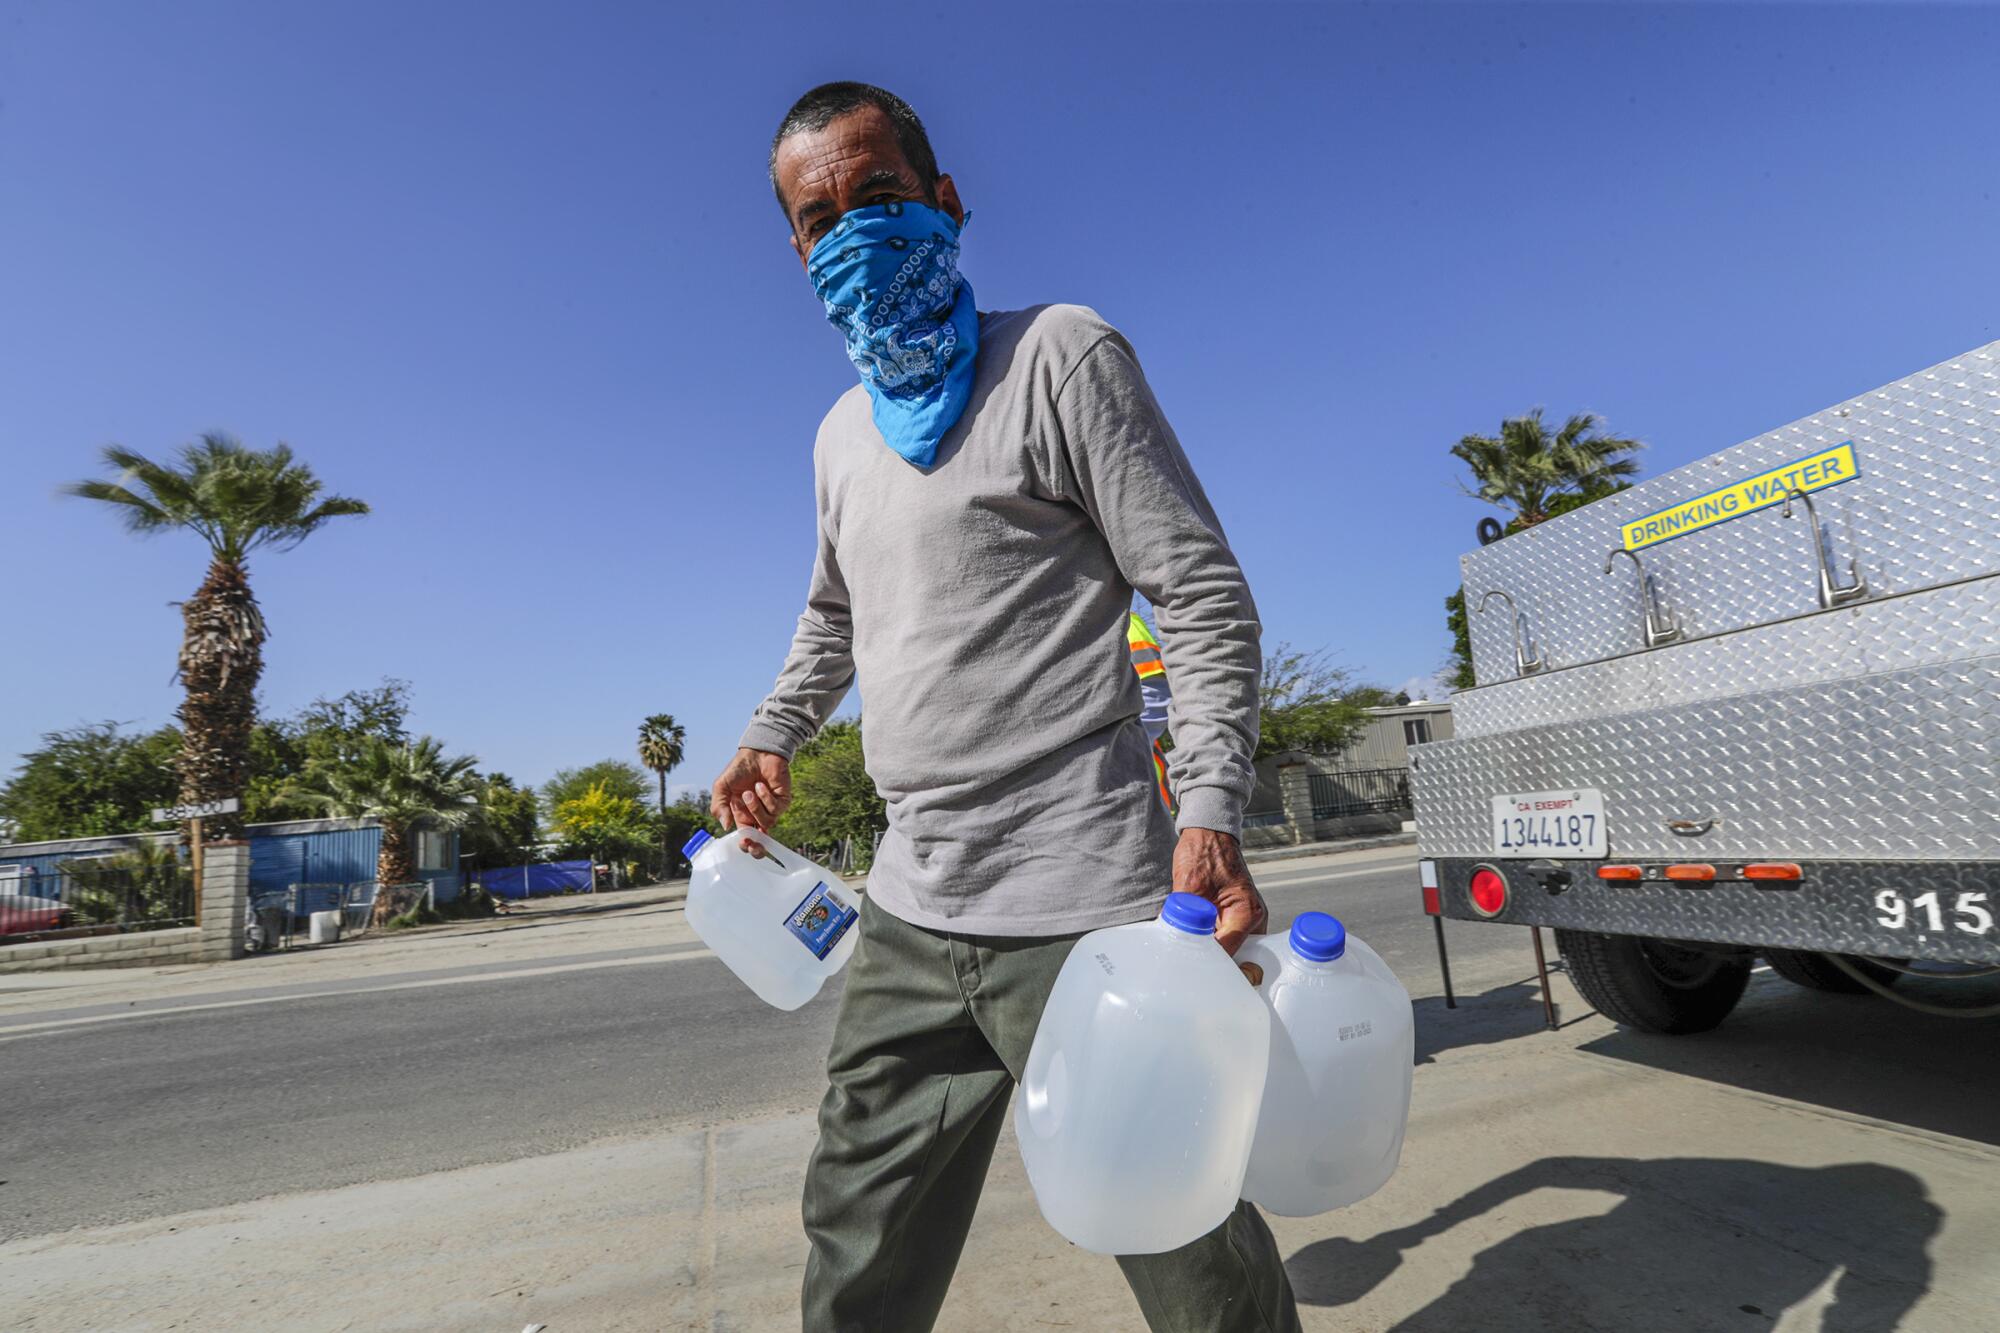 Jesus Ramon carries water bottles